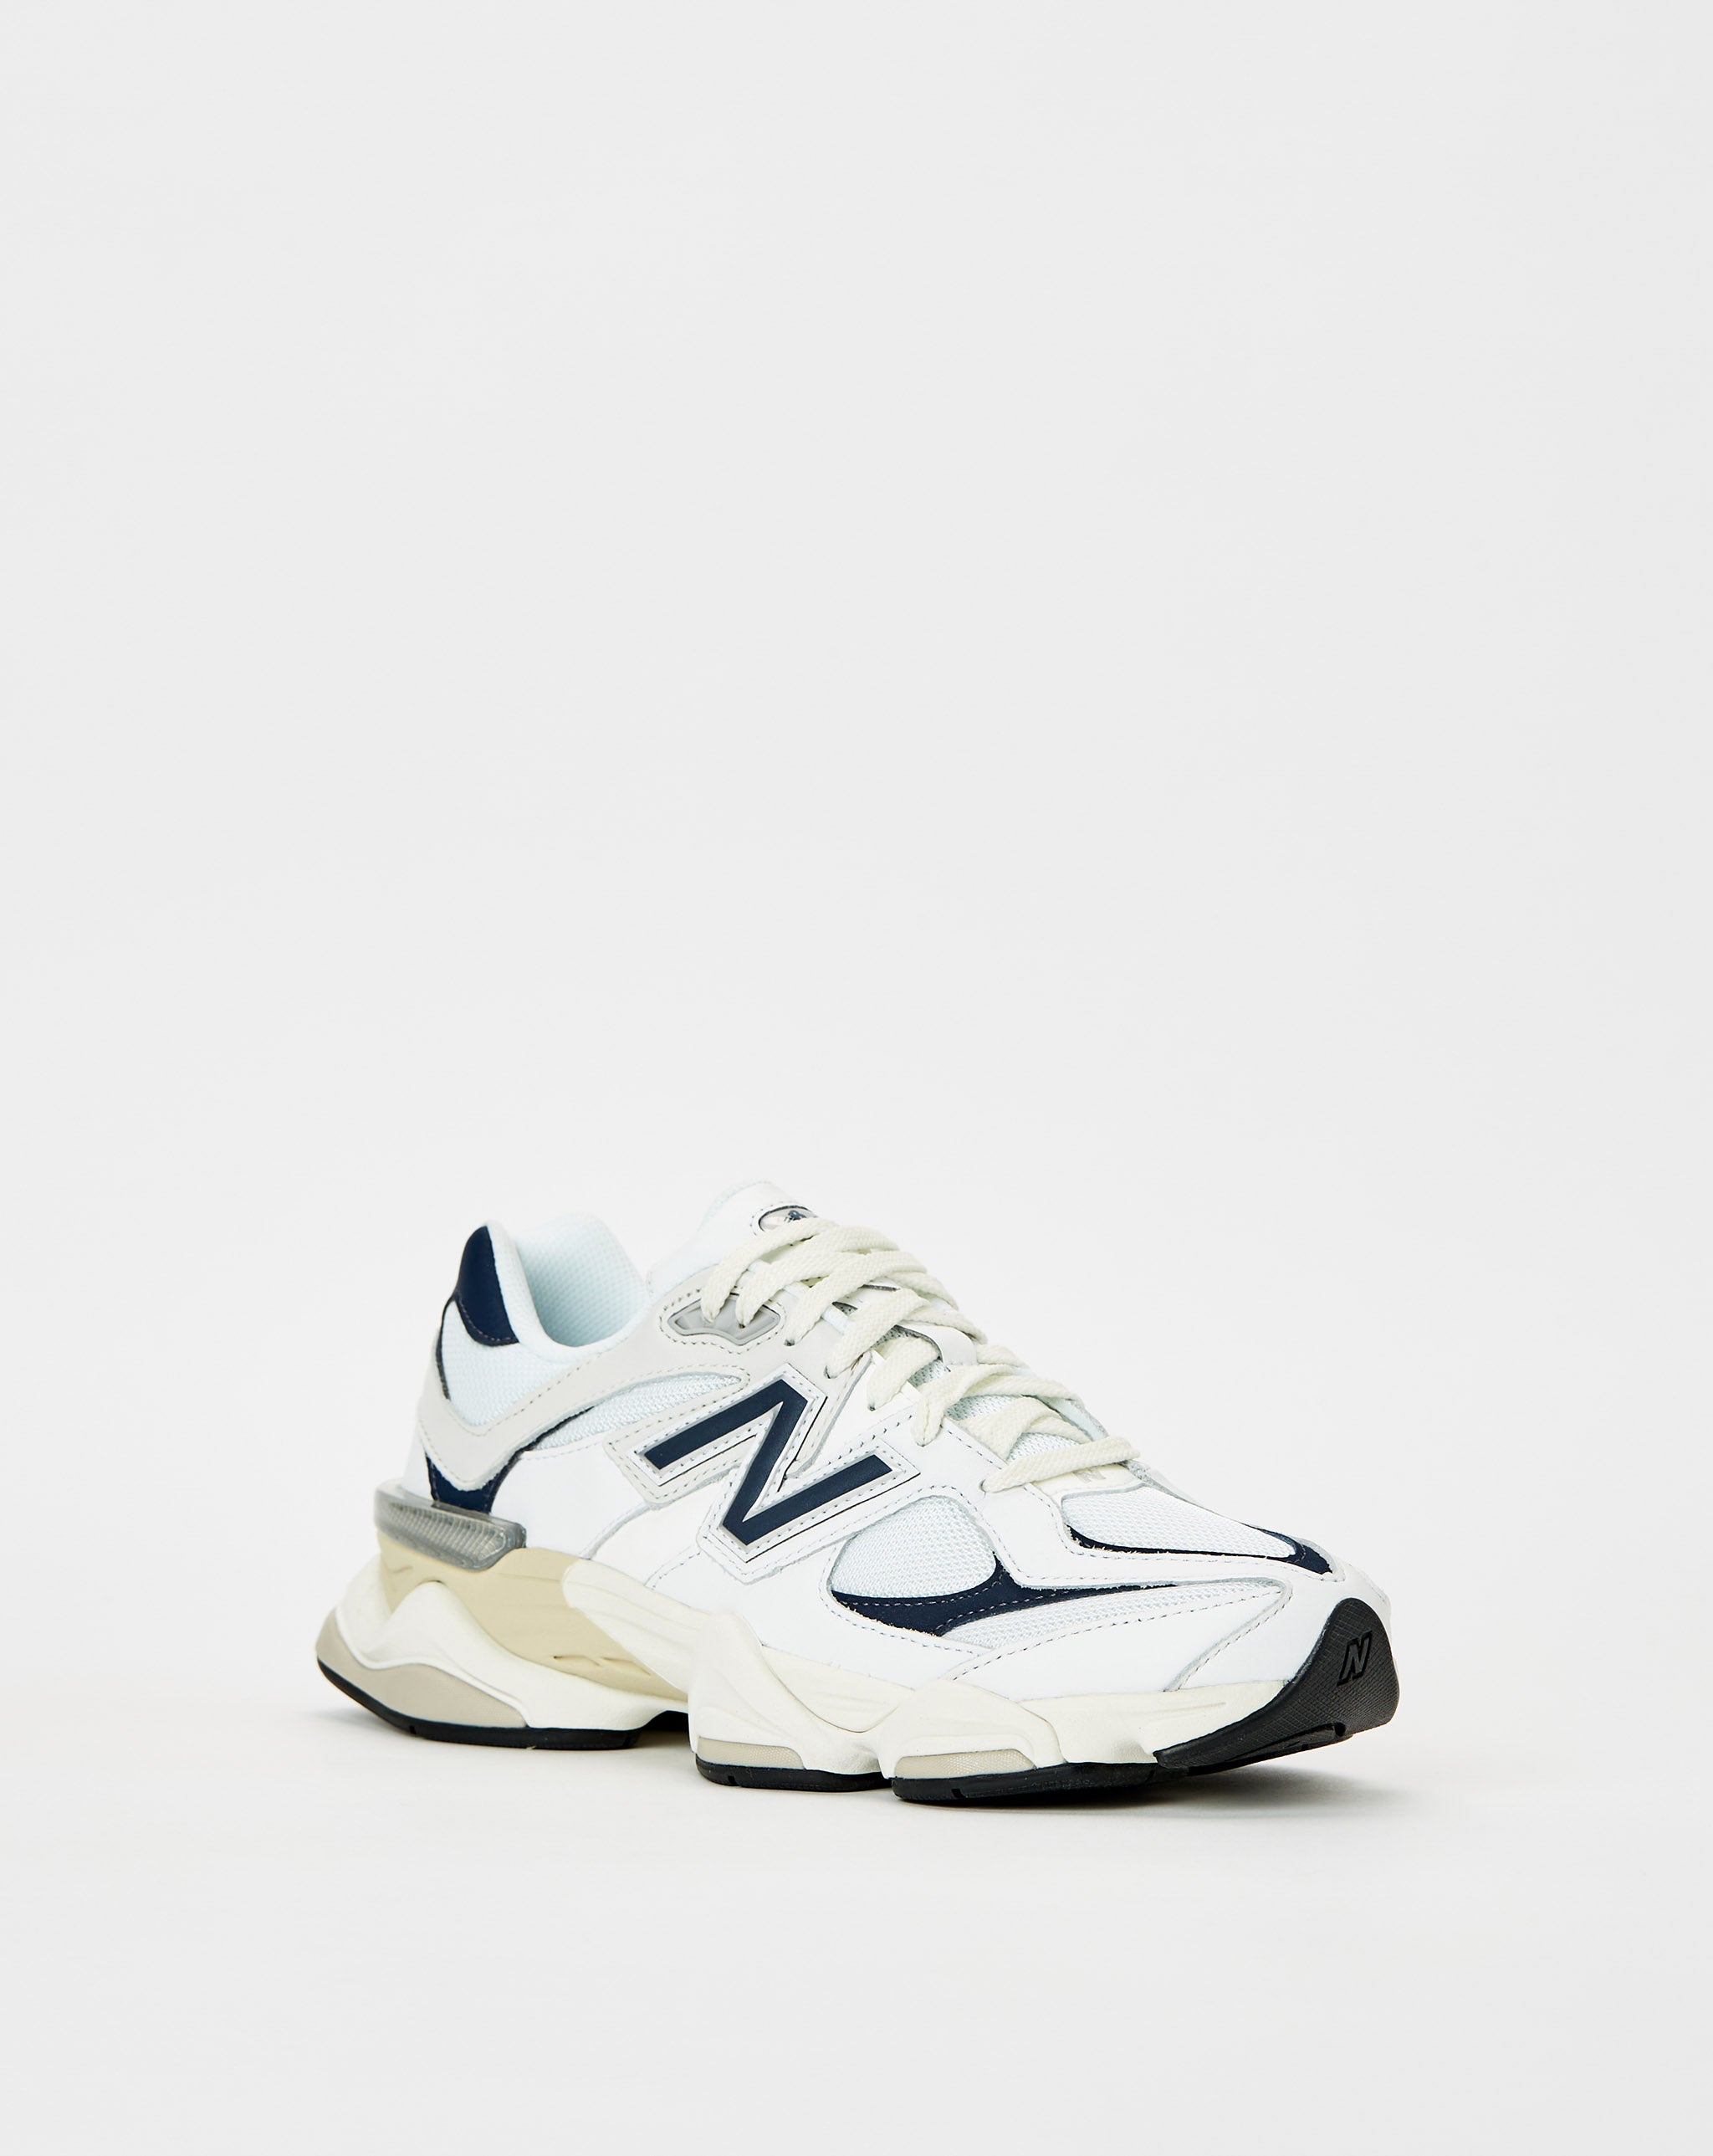 New Balance 9060 - Rule of Next Footwear